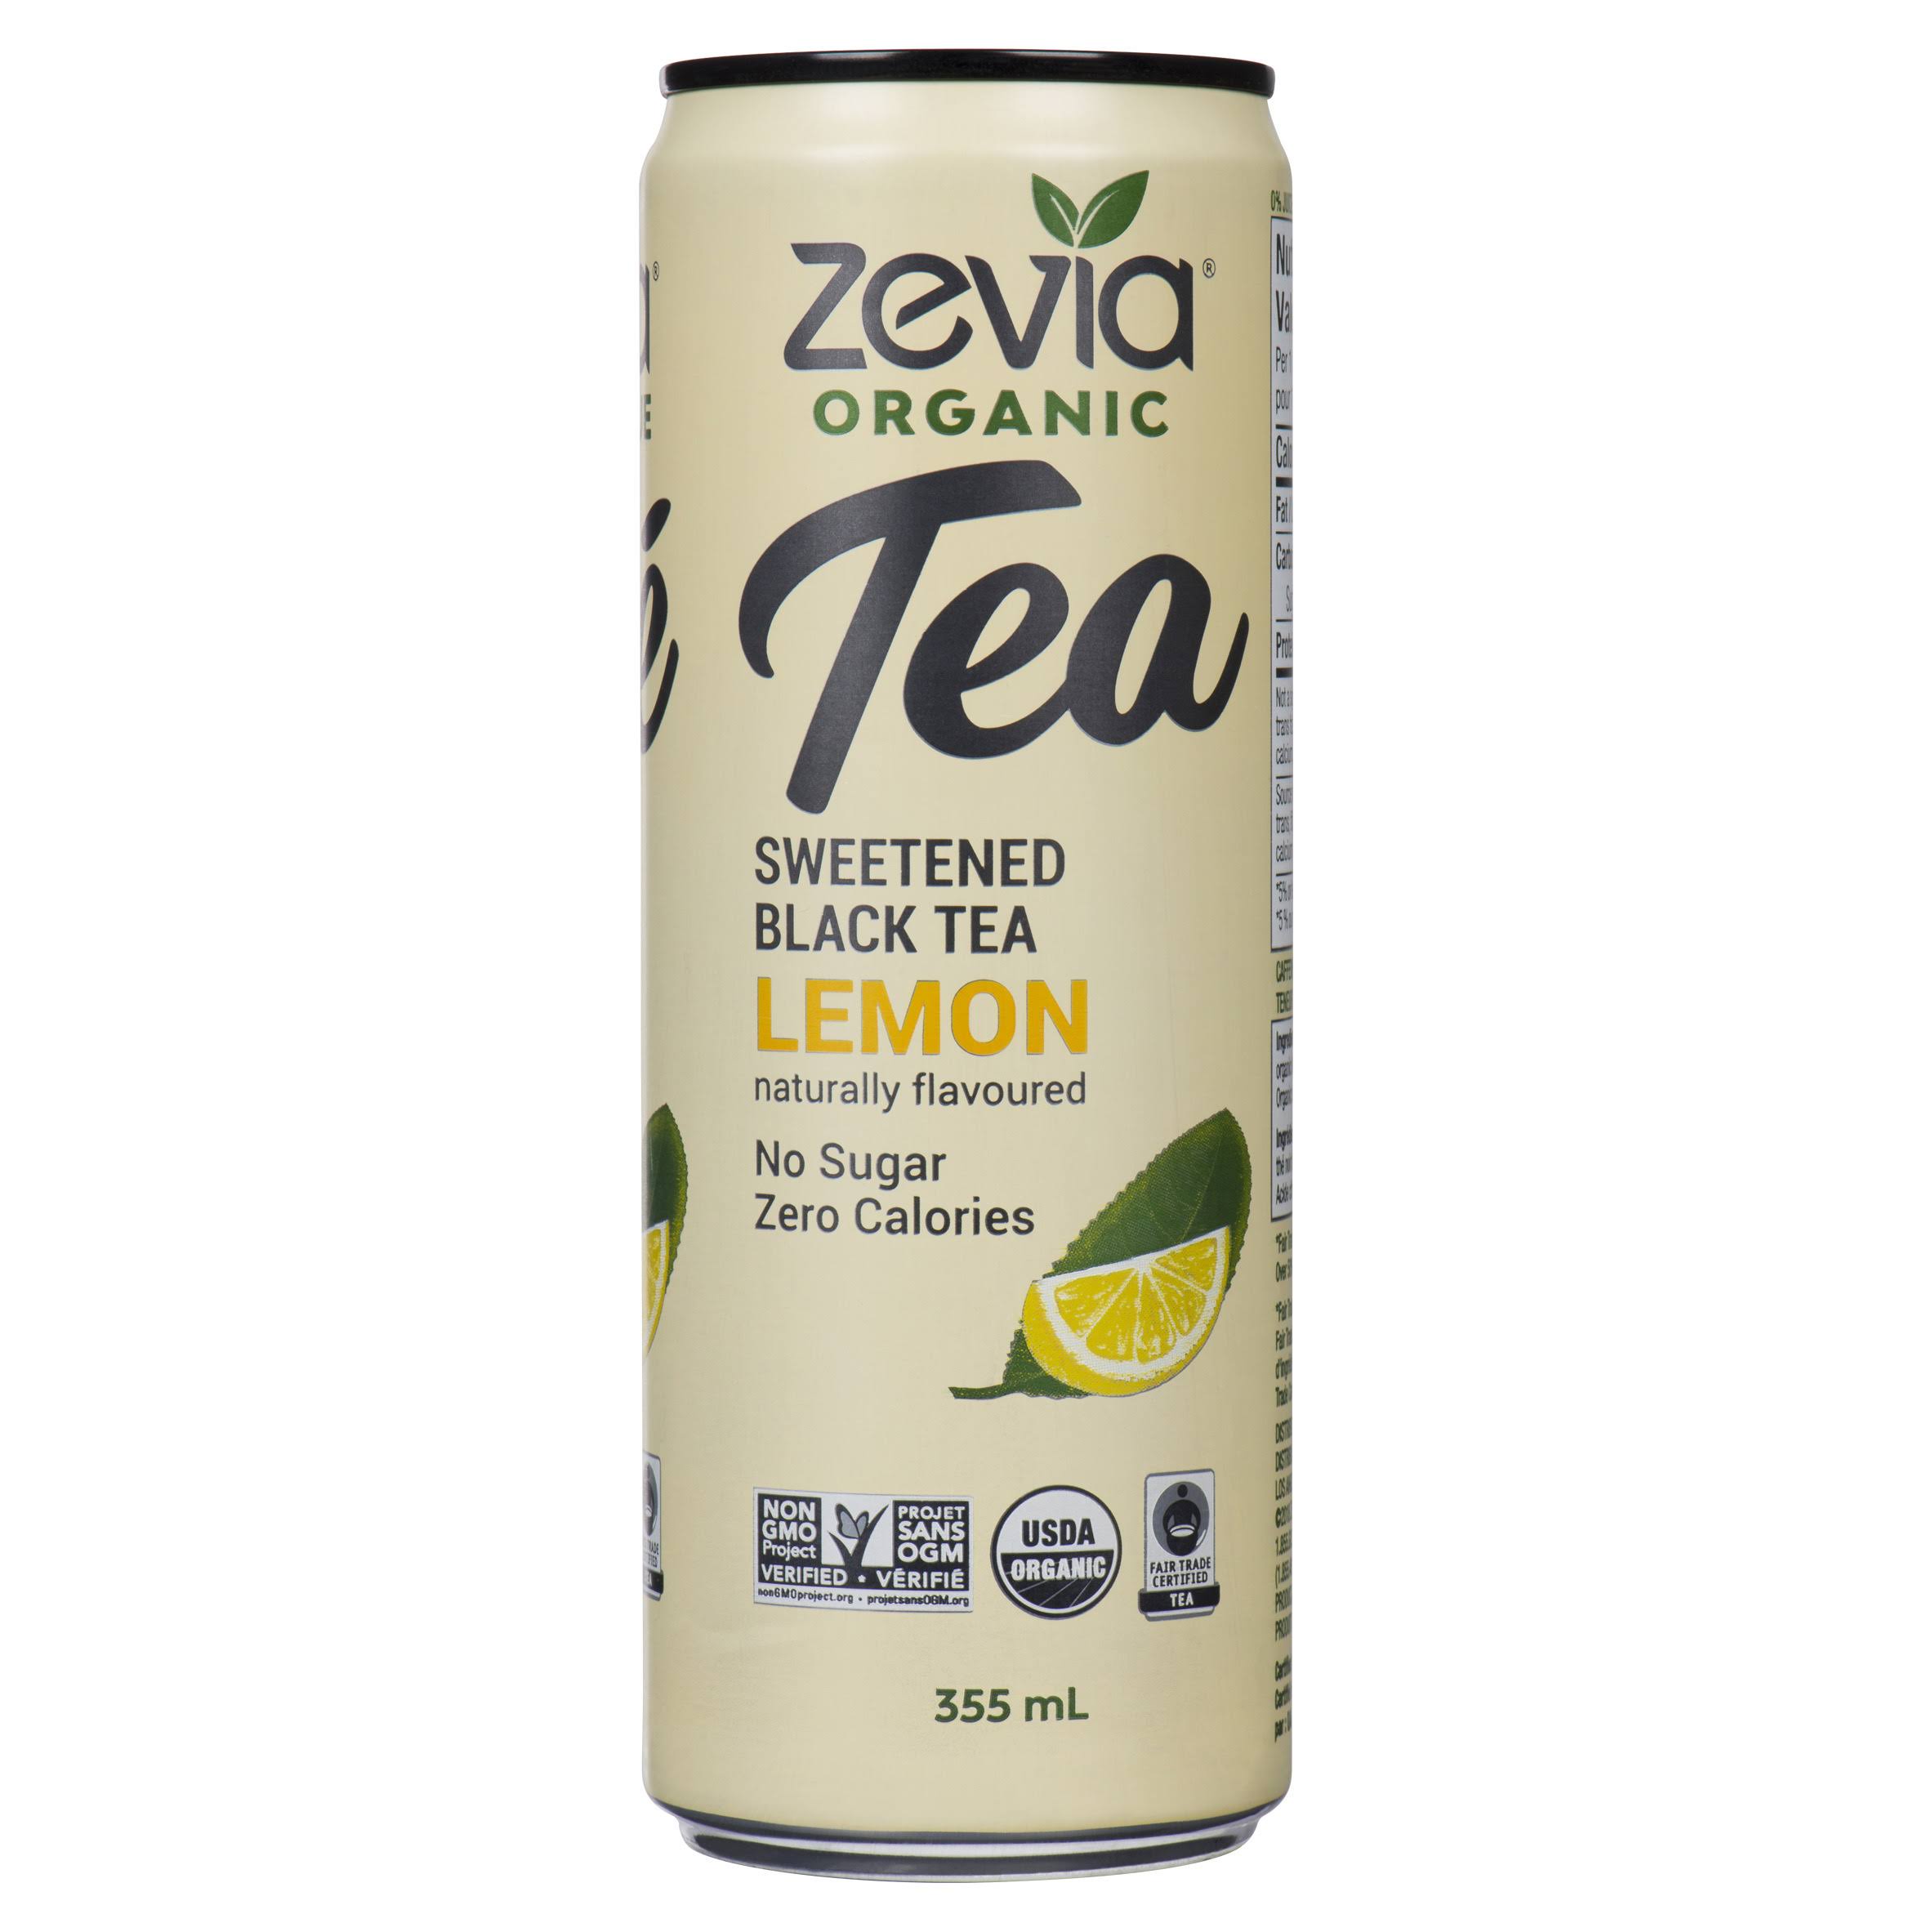 Zevia Organic Tea - Sweetened Black Tea - Lemon